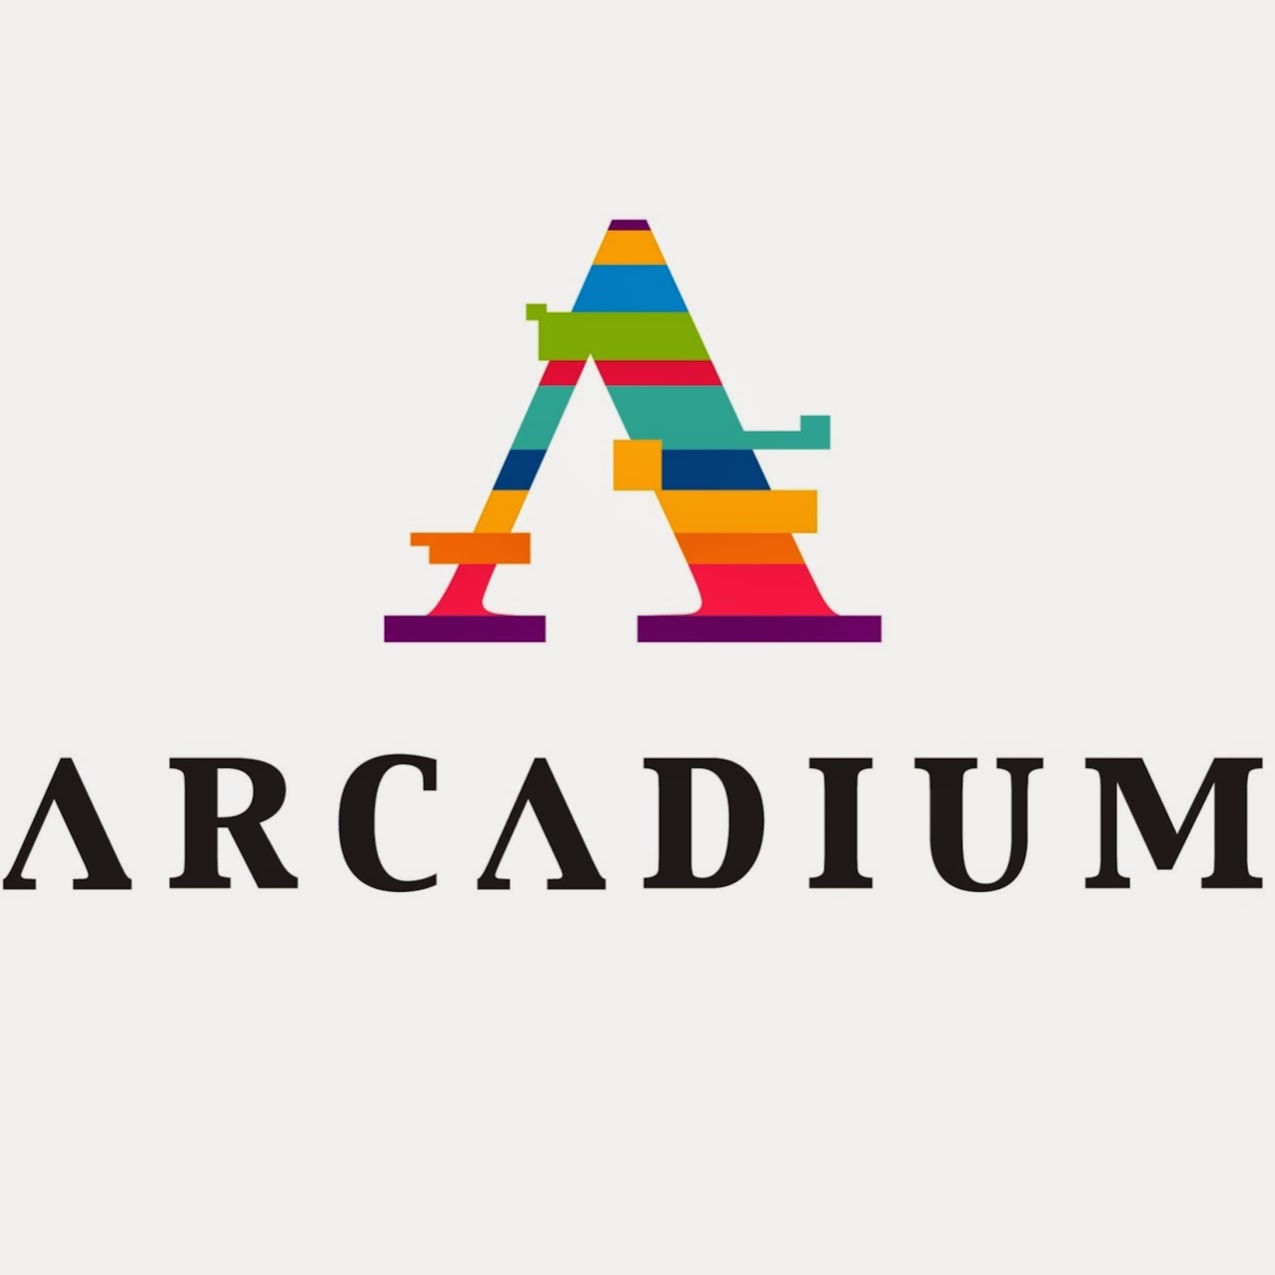 Arcadium Sinemaları 